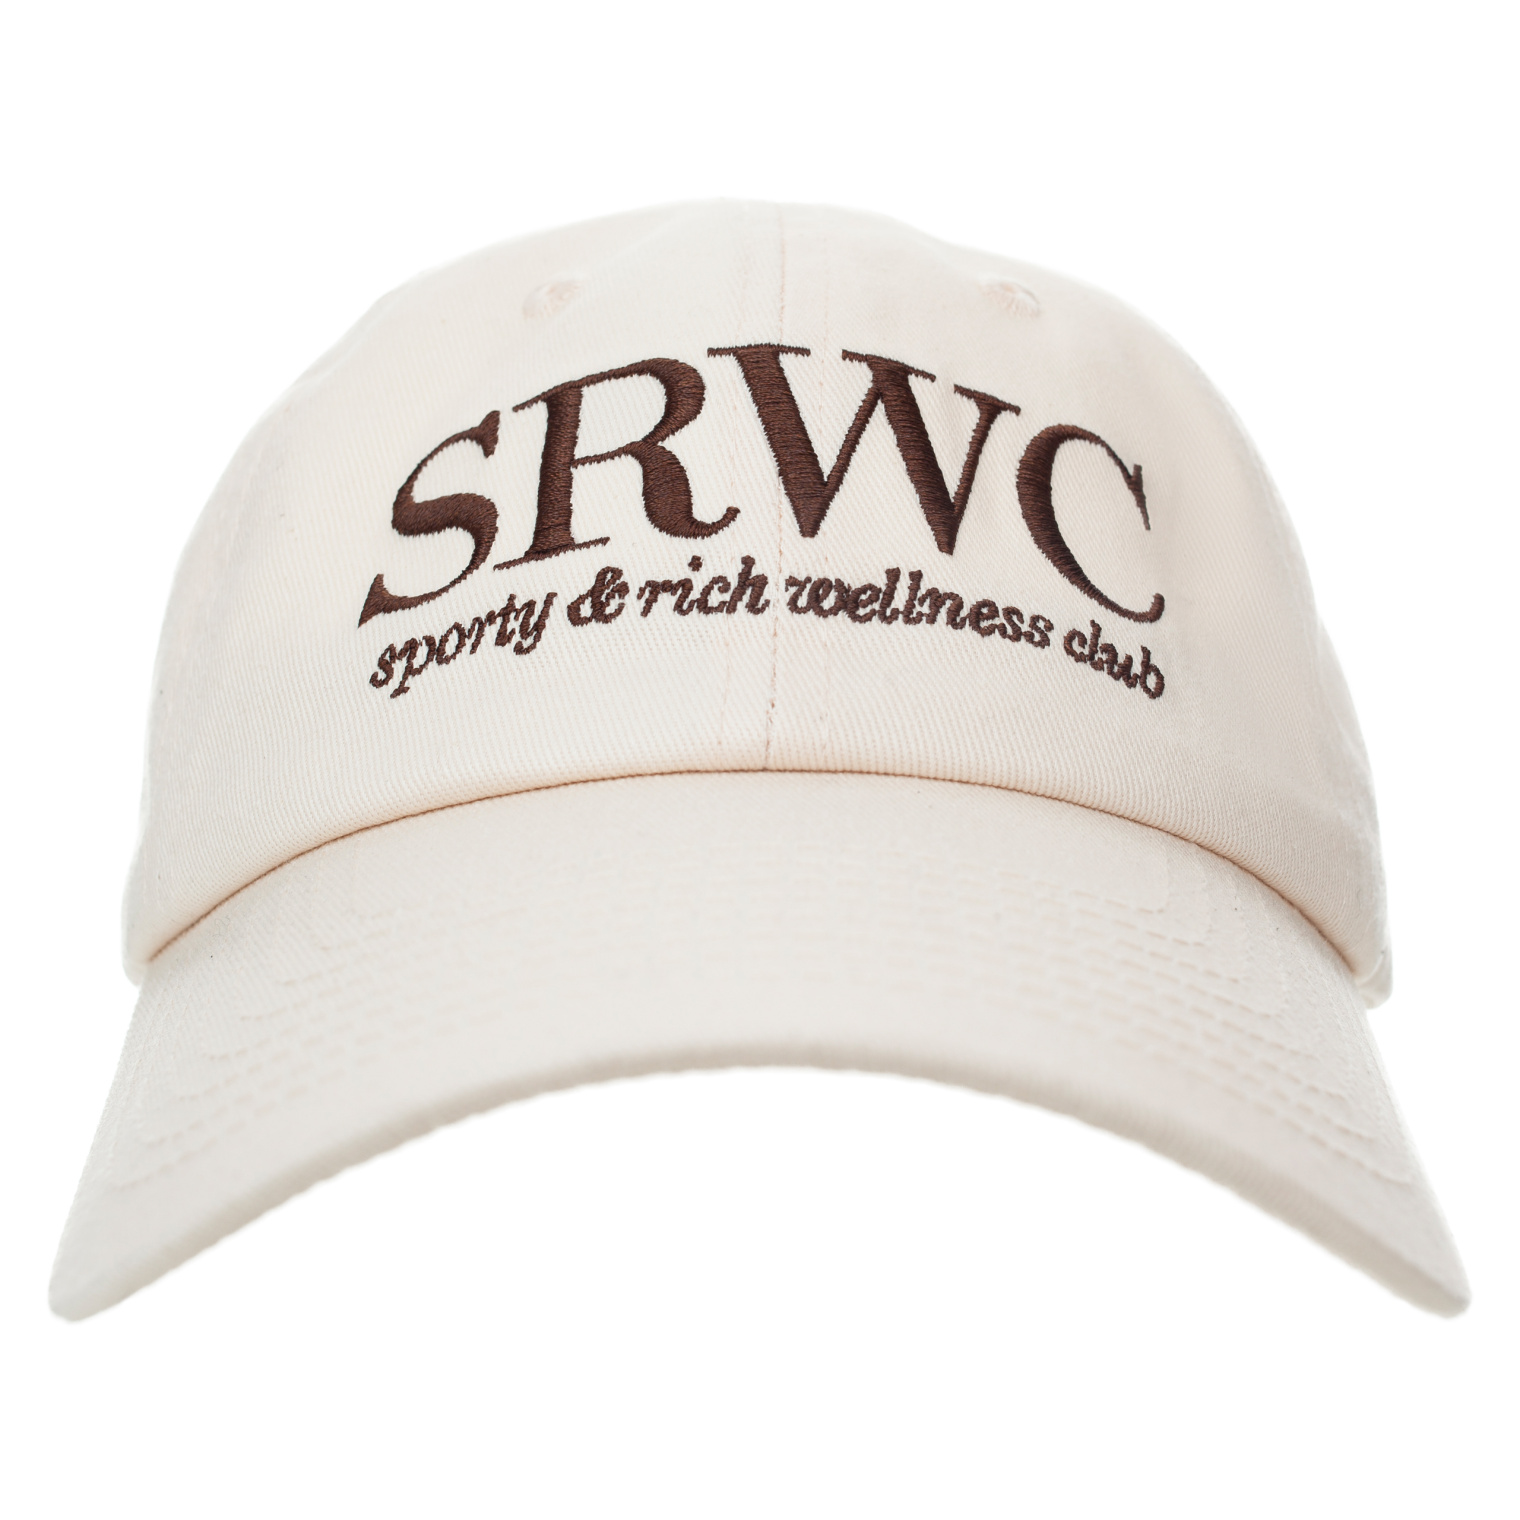 SPORTY & RICH SRWC embroidered cap